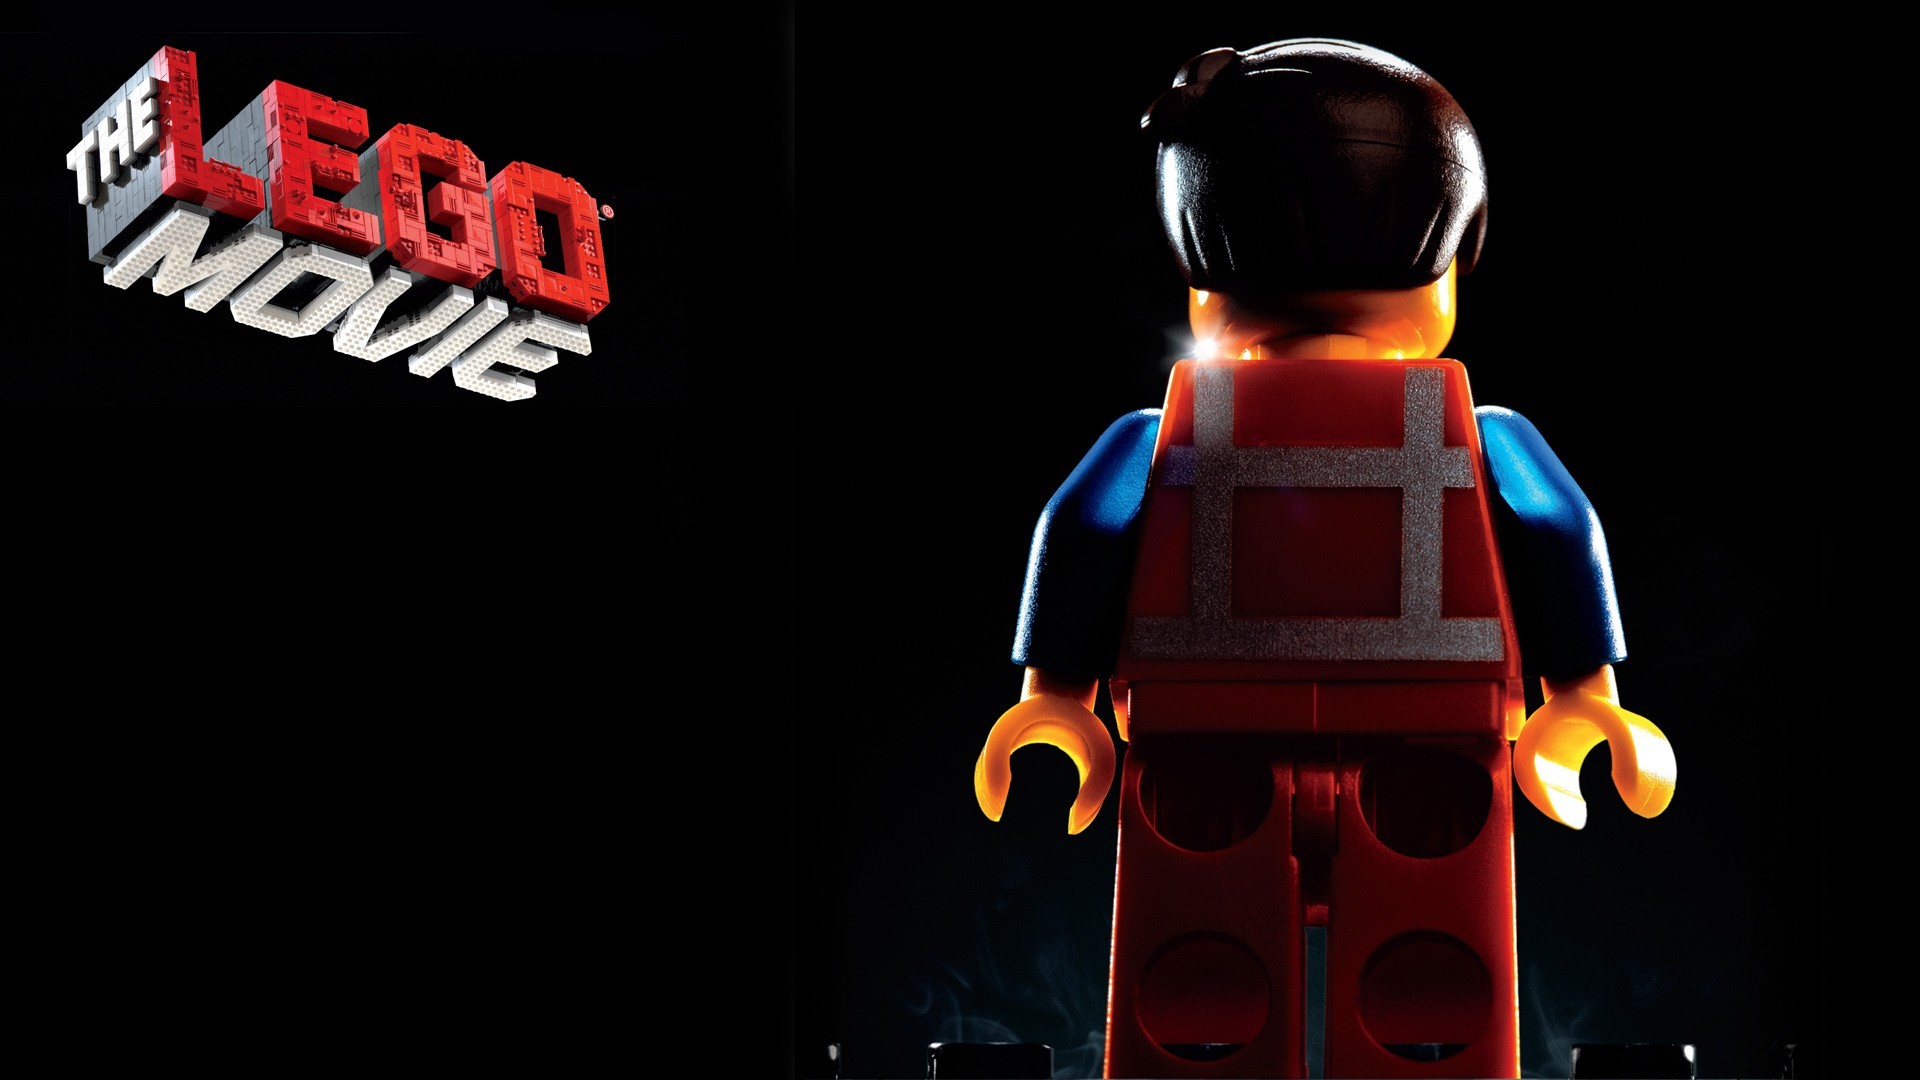 1920x1080 ... x 1080 Original. Description: Download 2014 The Lego Movie Movies  wallpaper ...